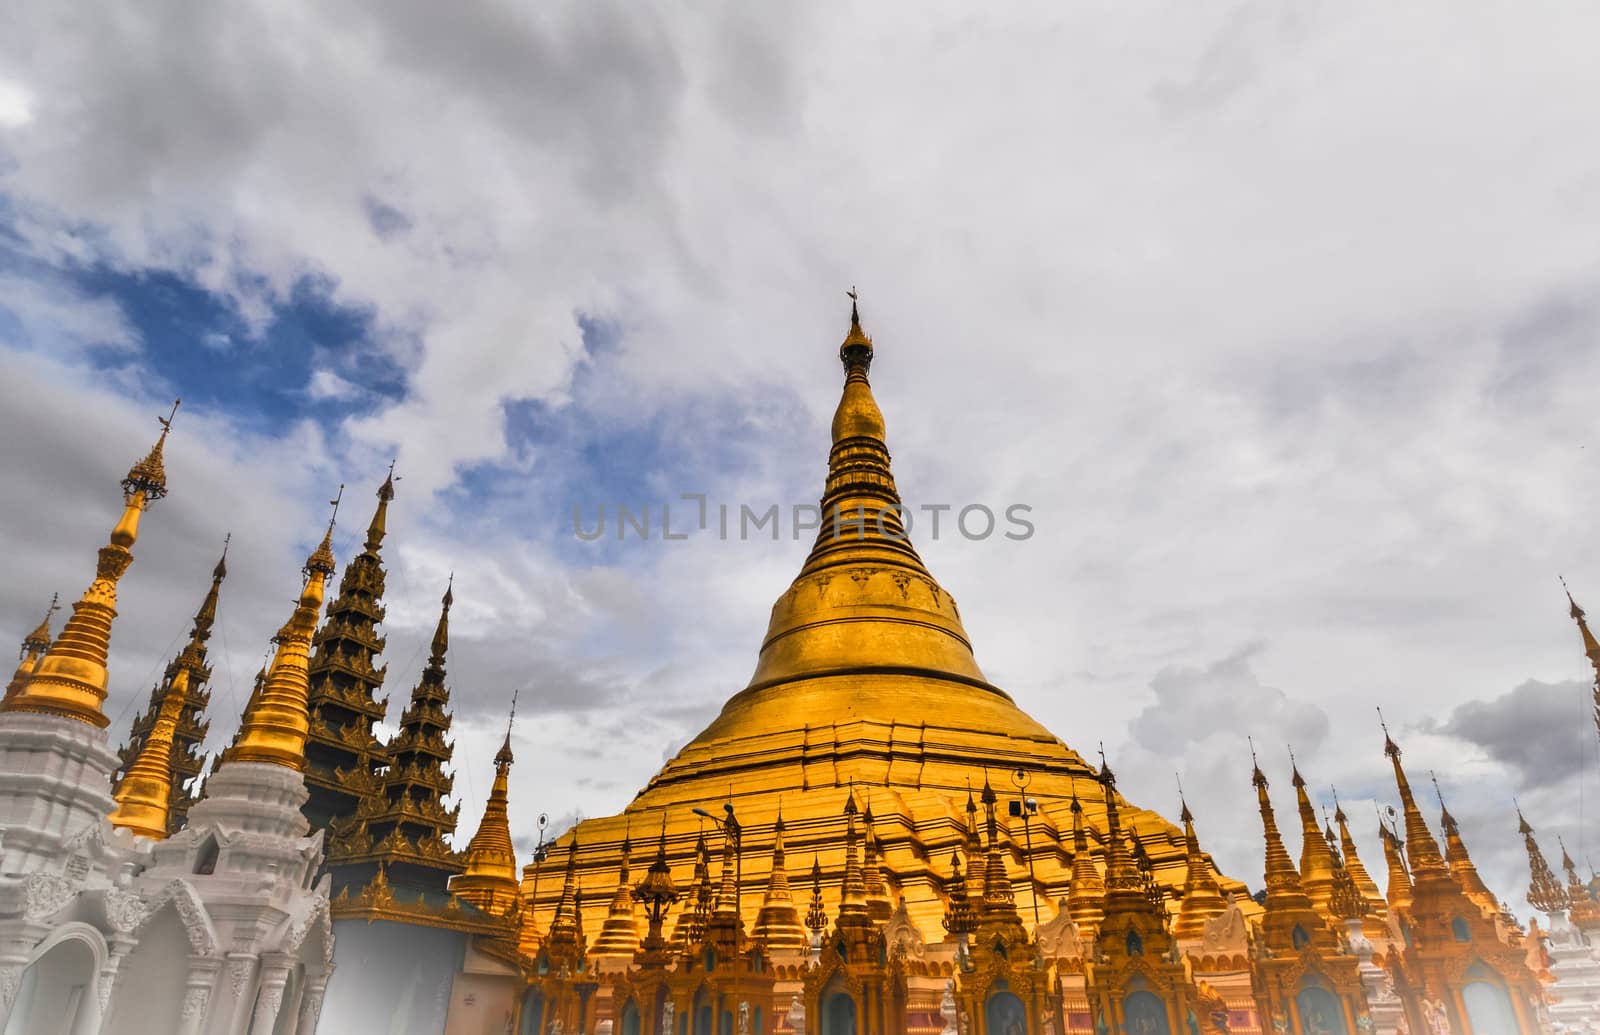 Shwedagon Pagoda(Great Dagon Pagoda) in Yangon, Myanmar by weltreisendertj